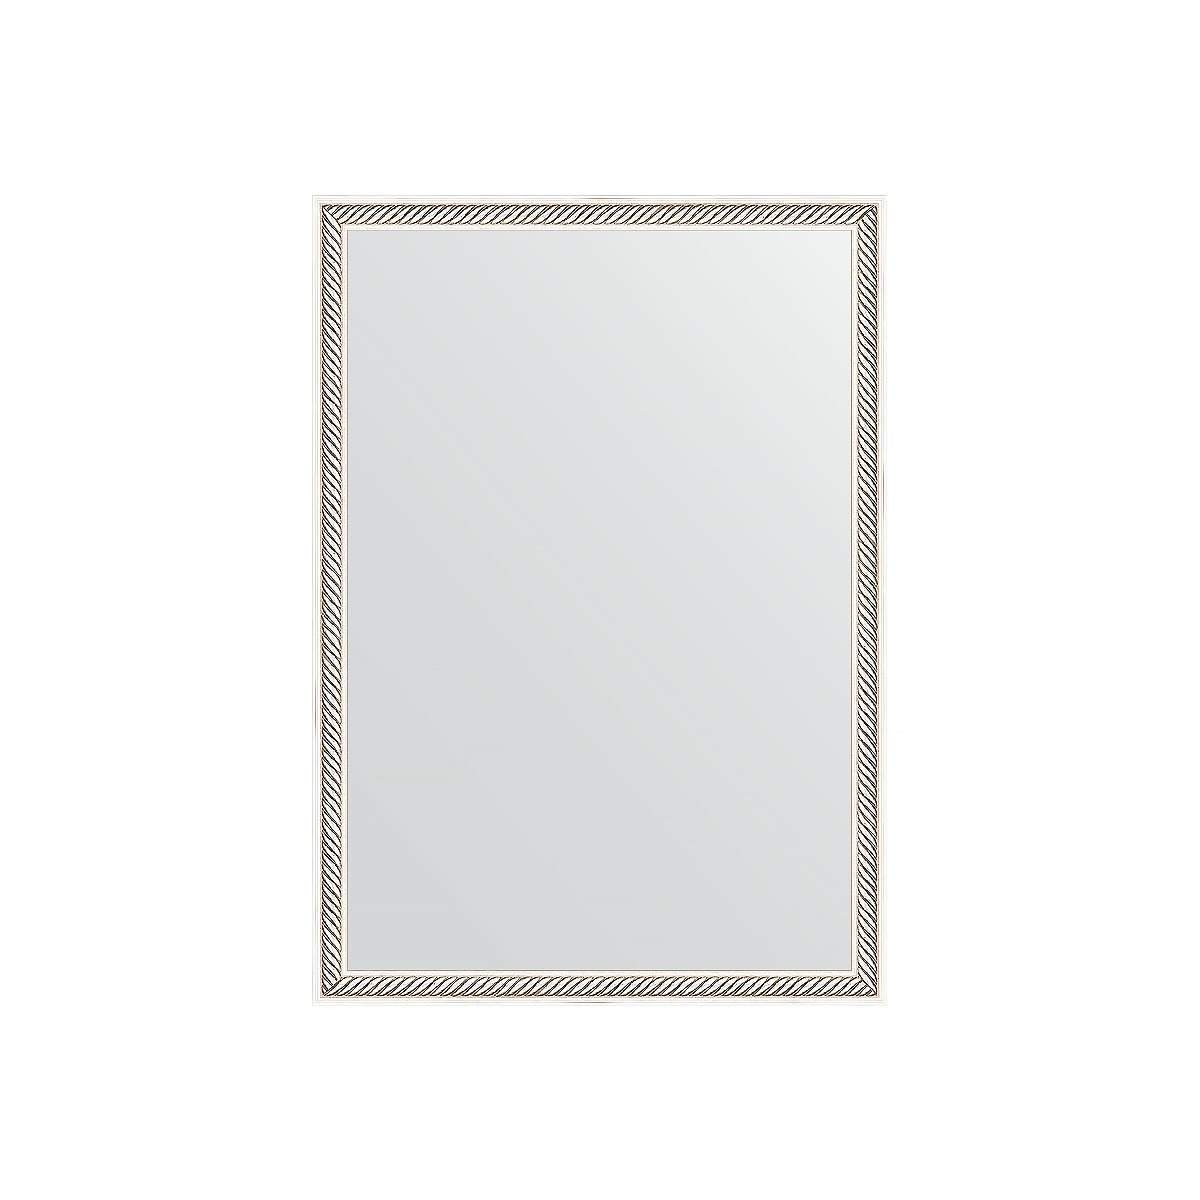 Зеркало в багетной раме Evoform витое серебро 28 мм 48х68 см зеркало с фацетом в багетной раме evoform травленое серебро 95 мм 58х88 см